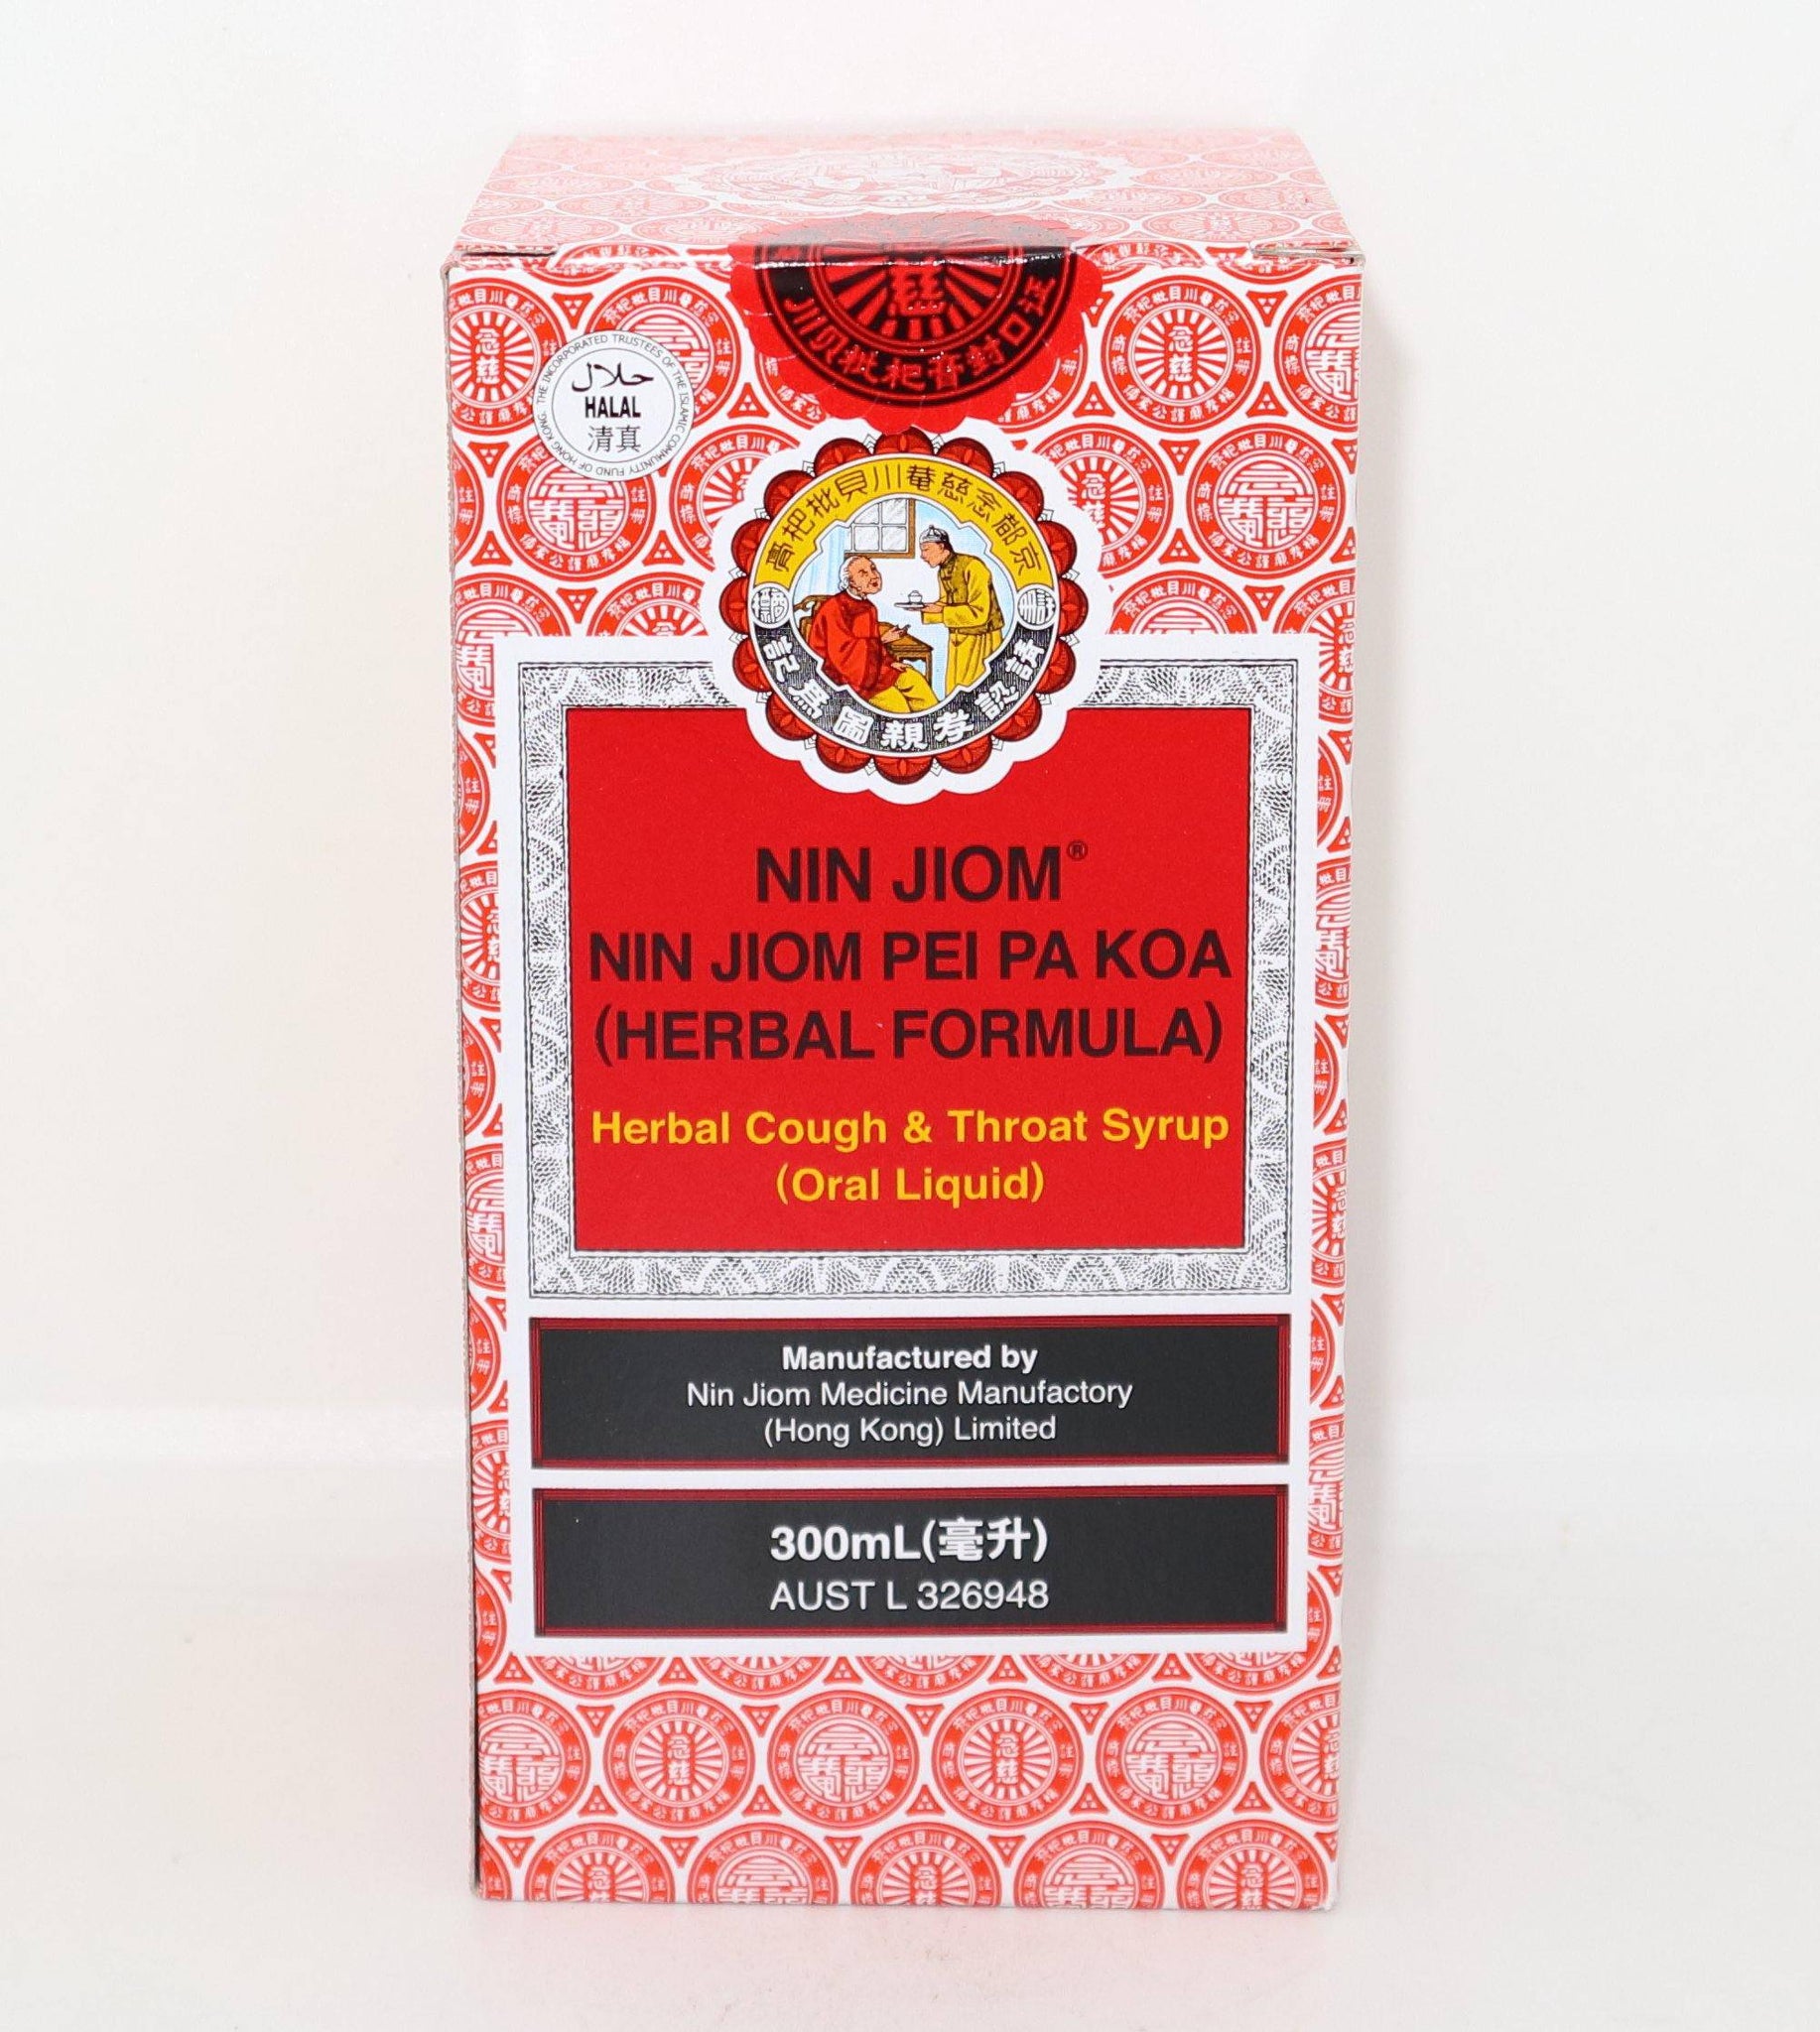 Nin Jiom Pei Pa Koa (Herbal Formula) 300ml – Crown Supermarket